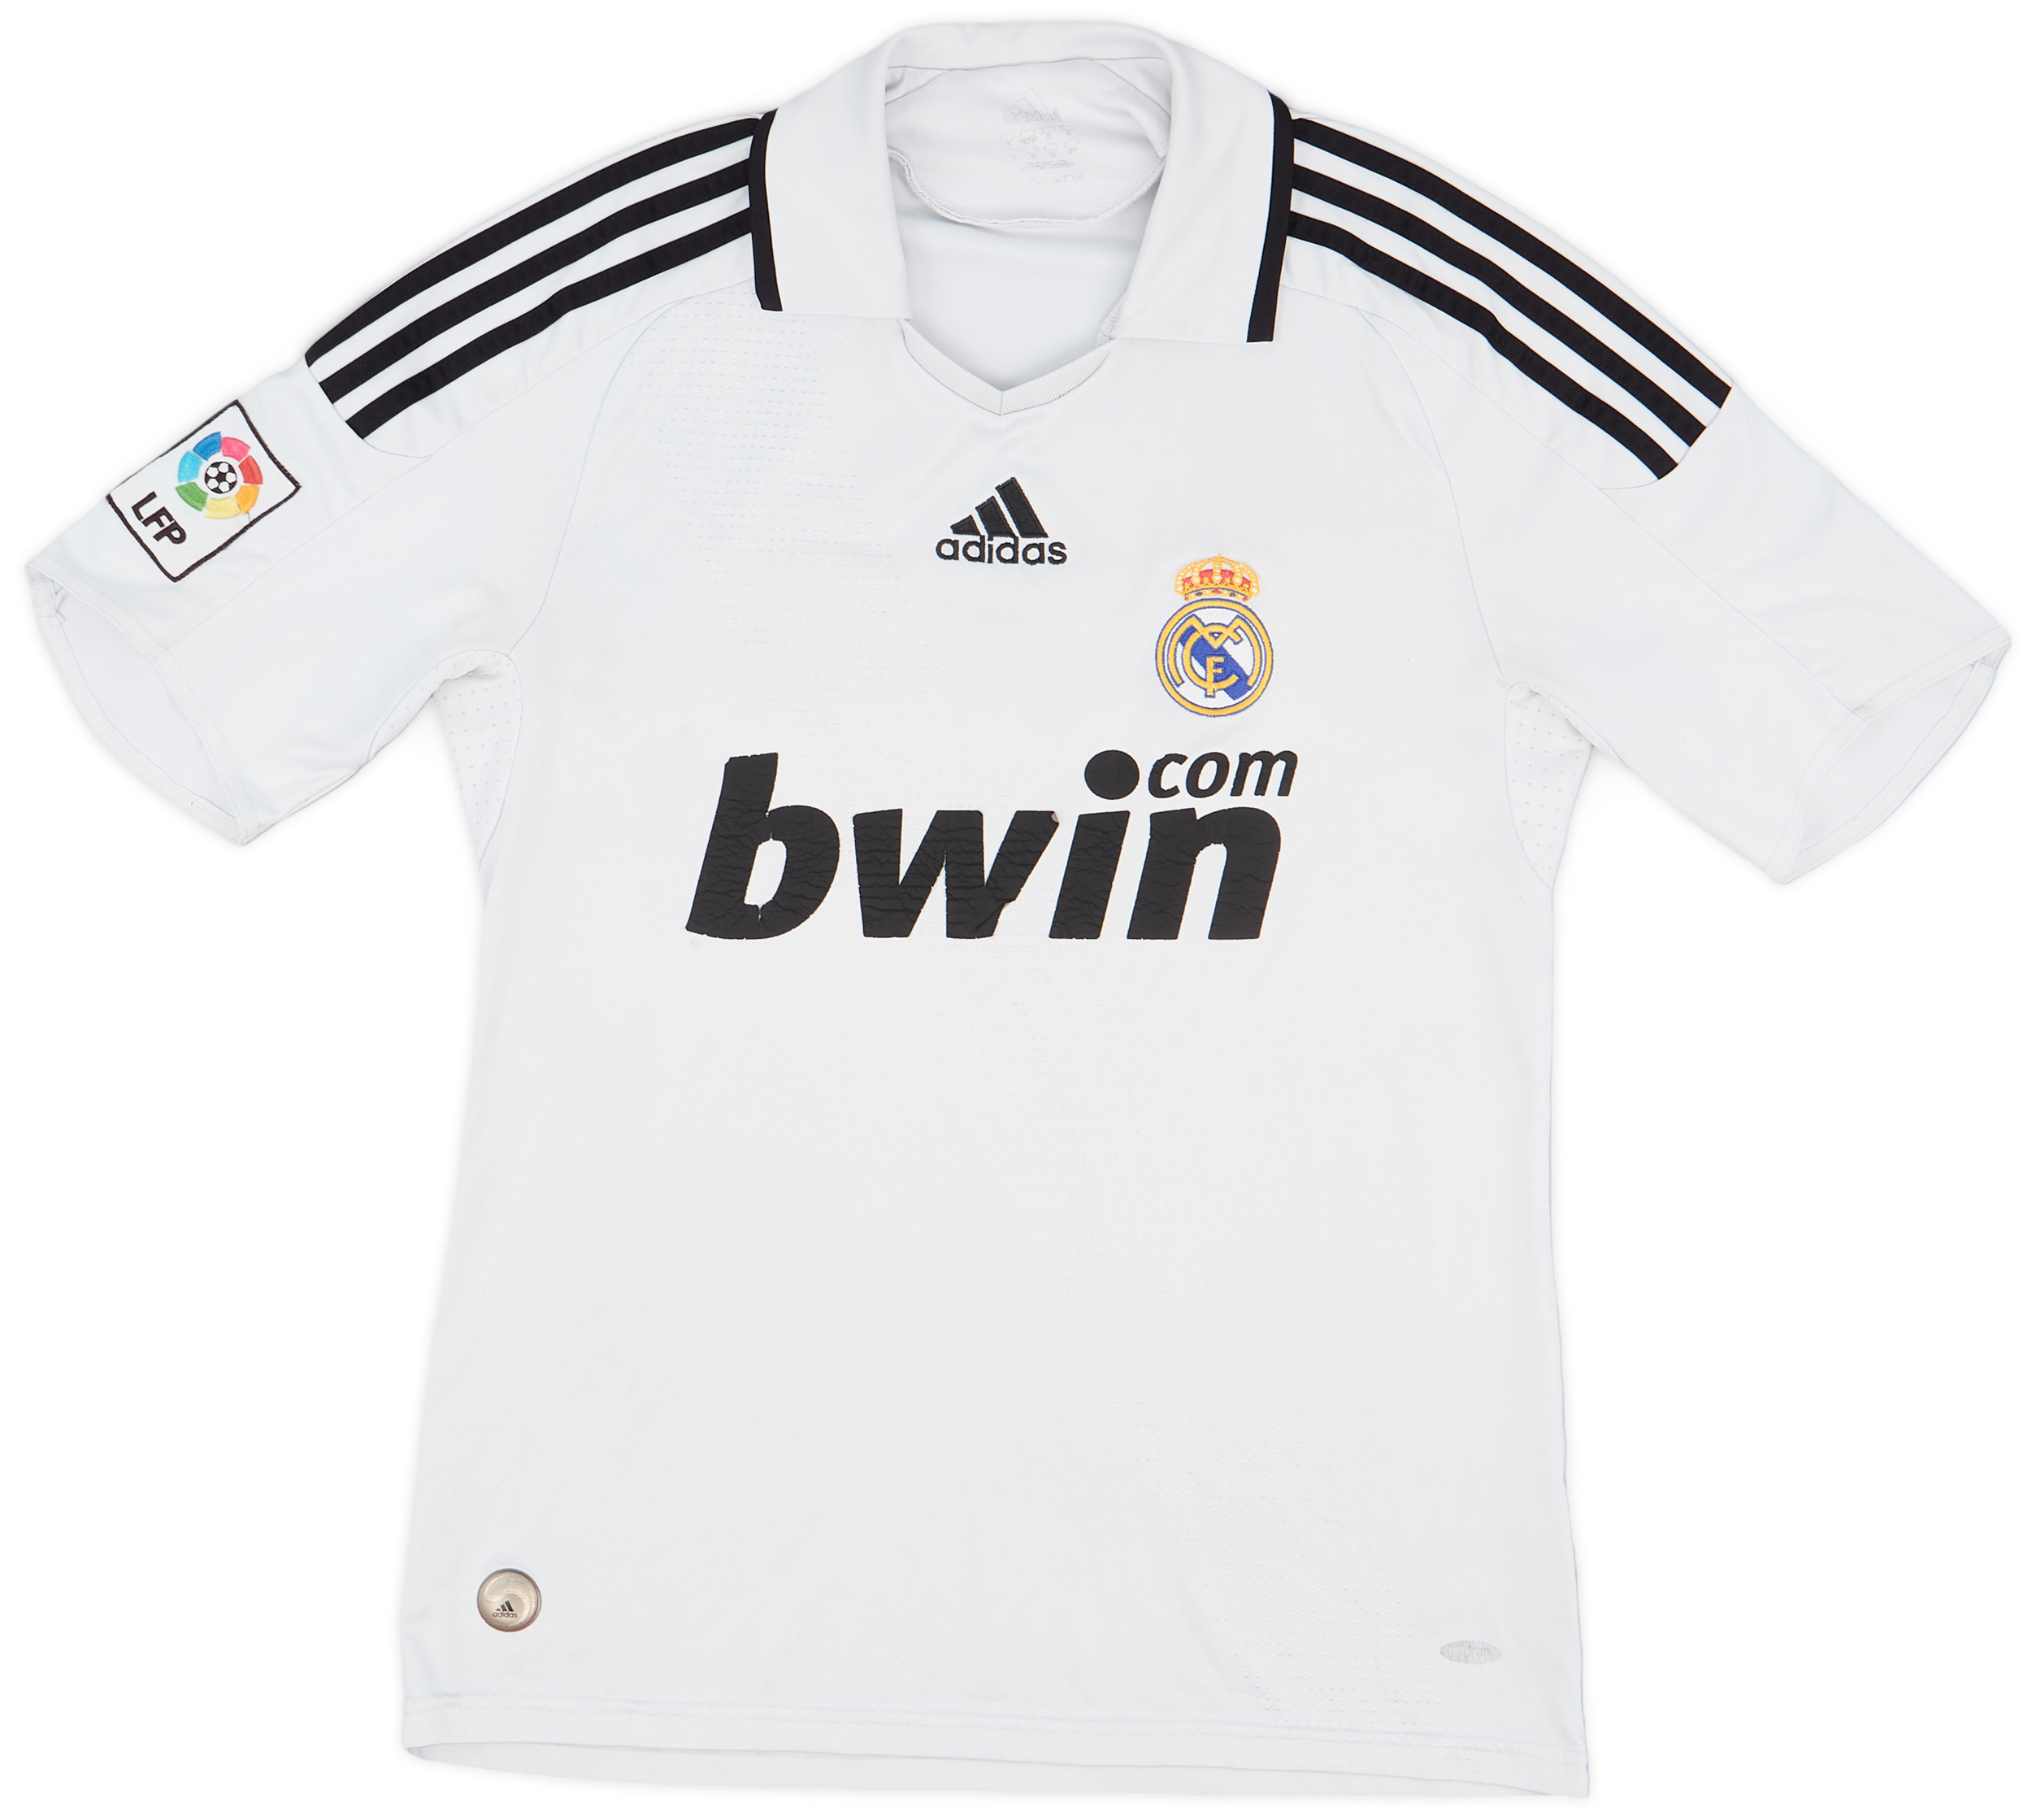 2008-09 Real Madrid Home Shirt - 5/10 - ()